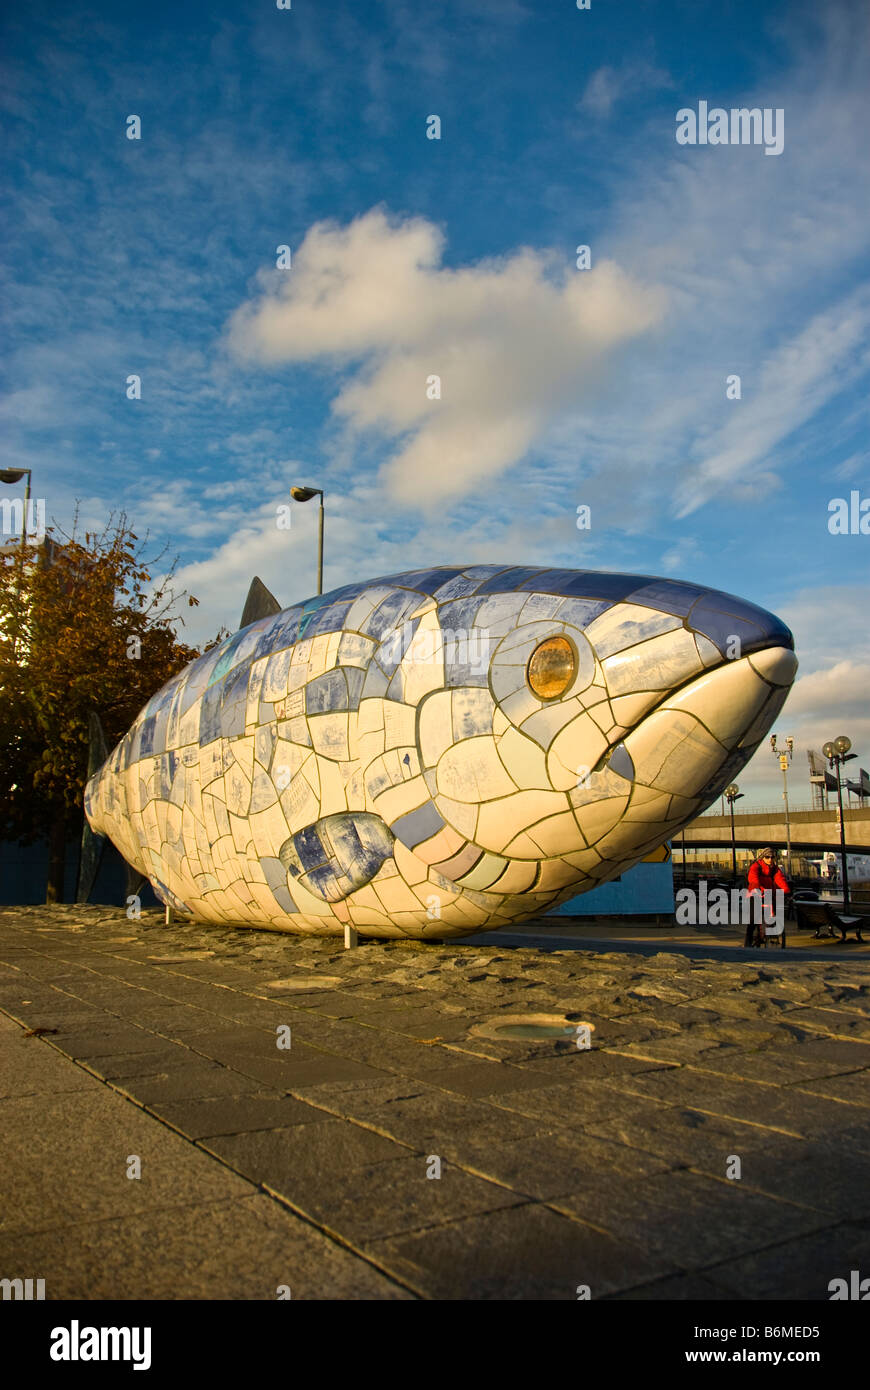 Belfast gros poisson sculpture art public attraction touristique populaire d'Irlande Waterfront lagan weir Laganside Banque D'Images